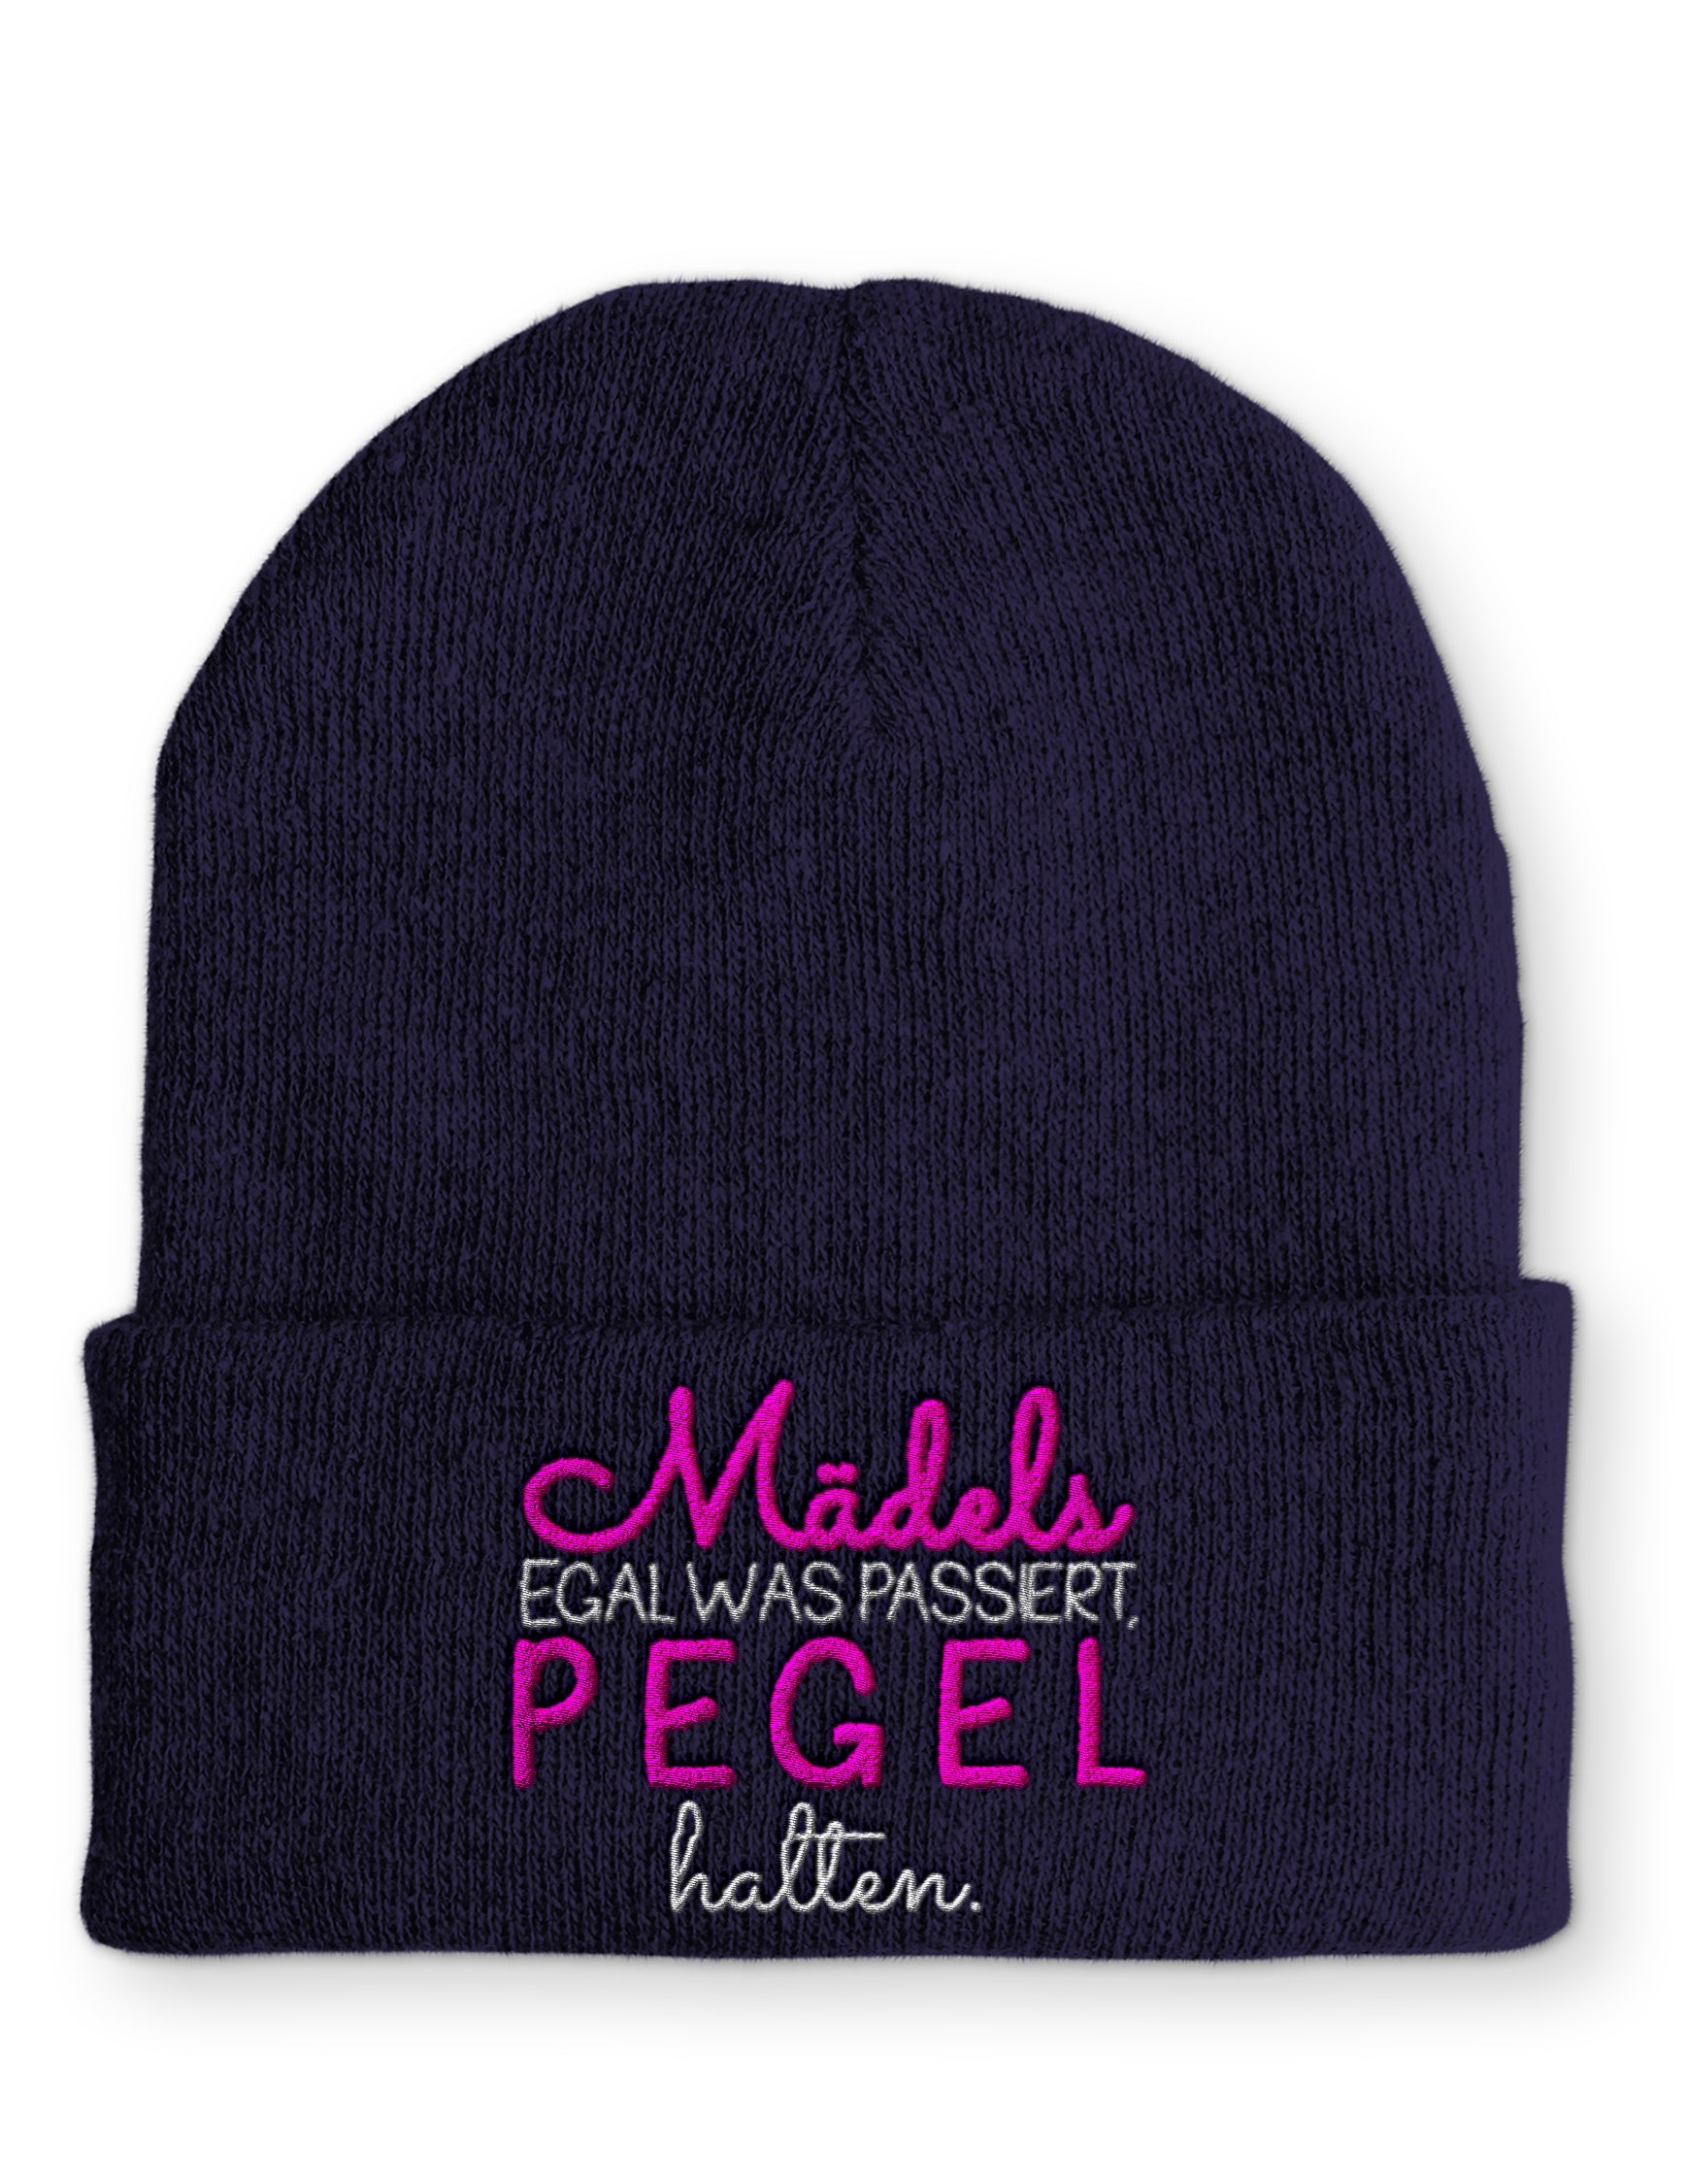 Mütze Mädels egal was passiert, Pegel halten.